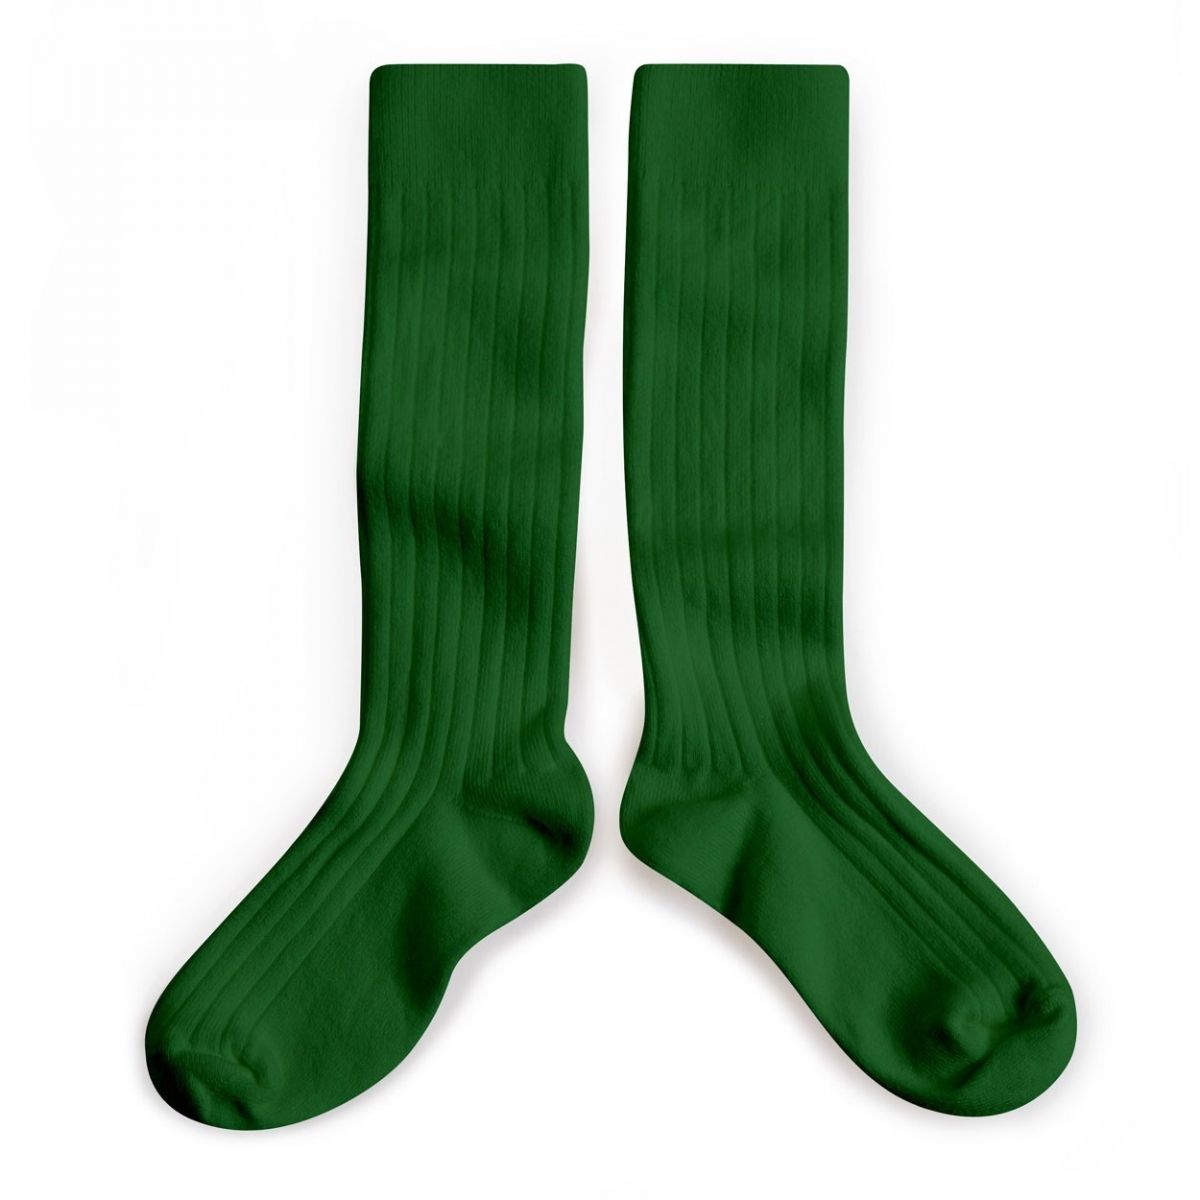 Collégien - Knee high socks La Haute vert jelly bean - Tights & socks - 2950 224 La Haute 